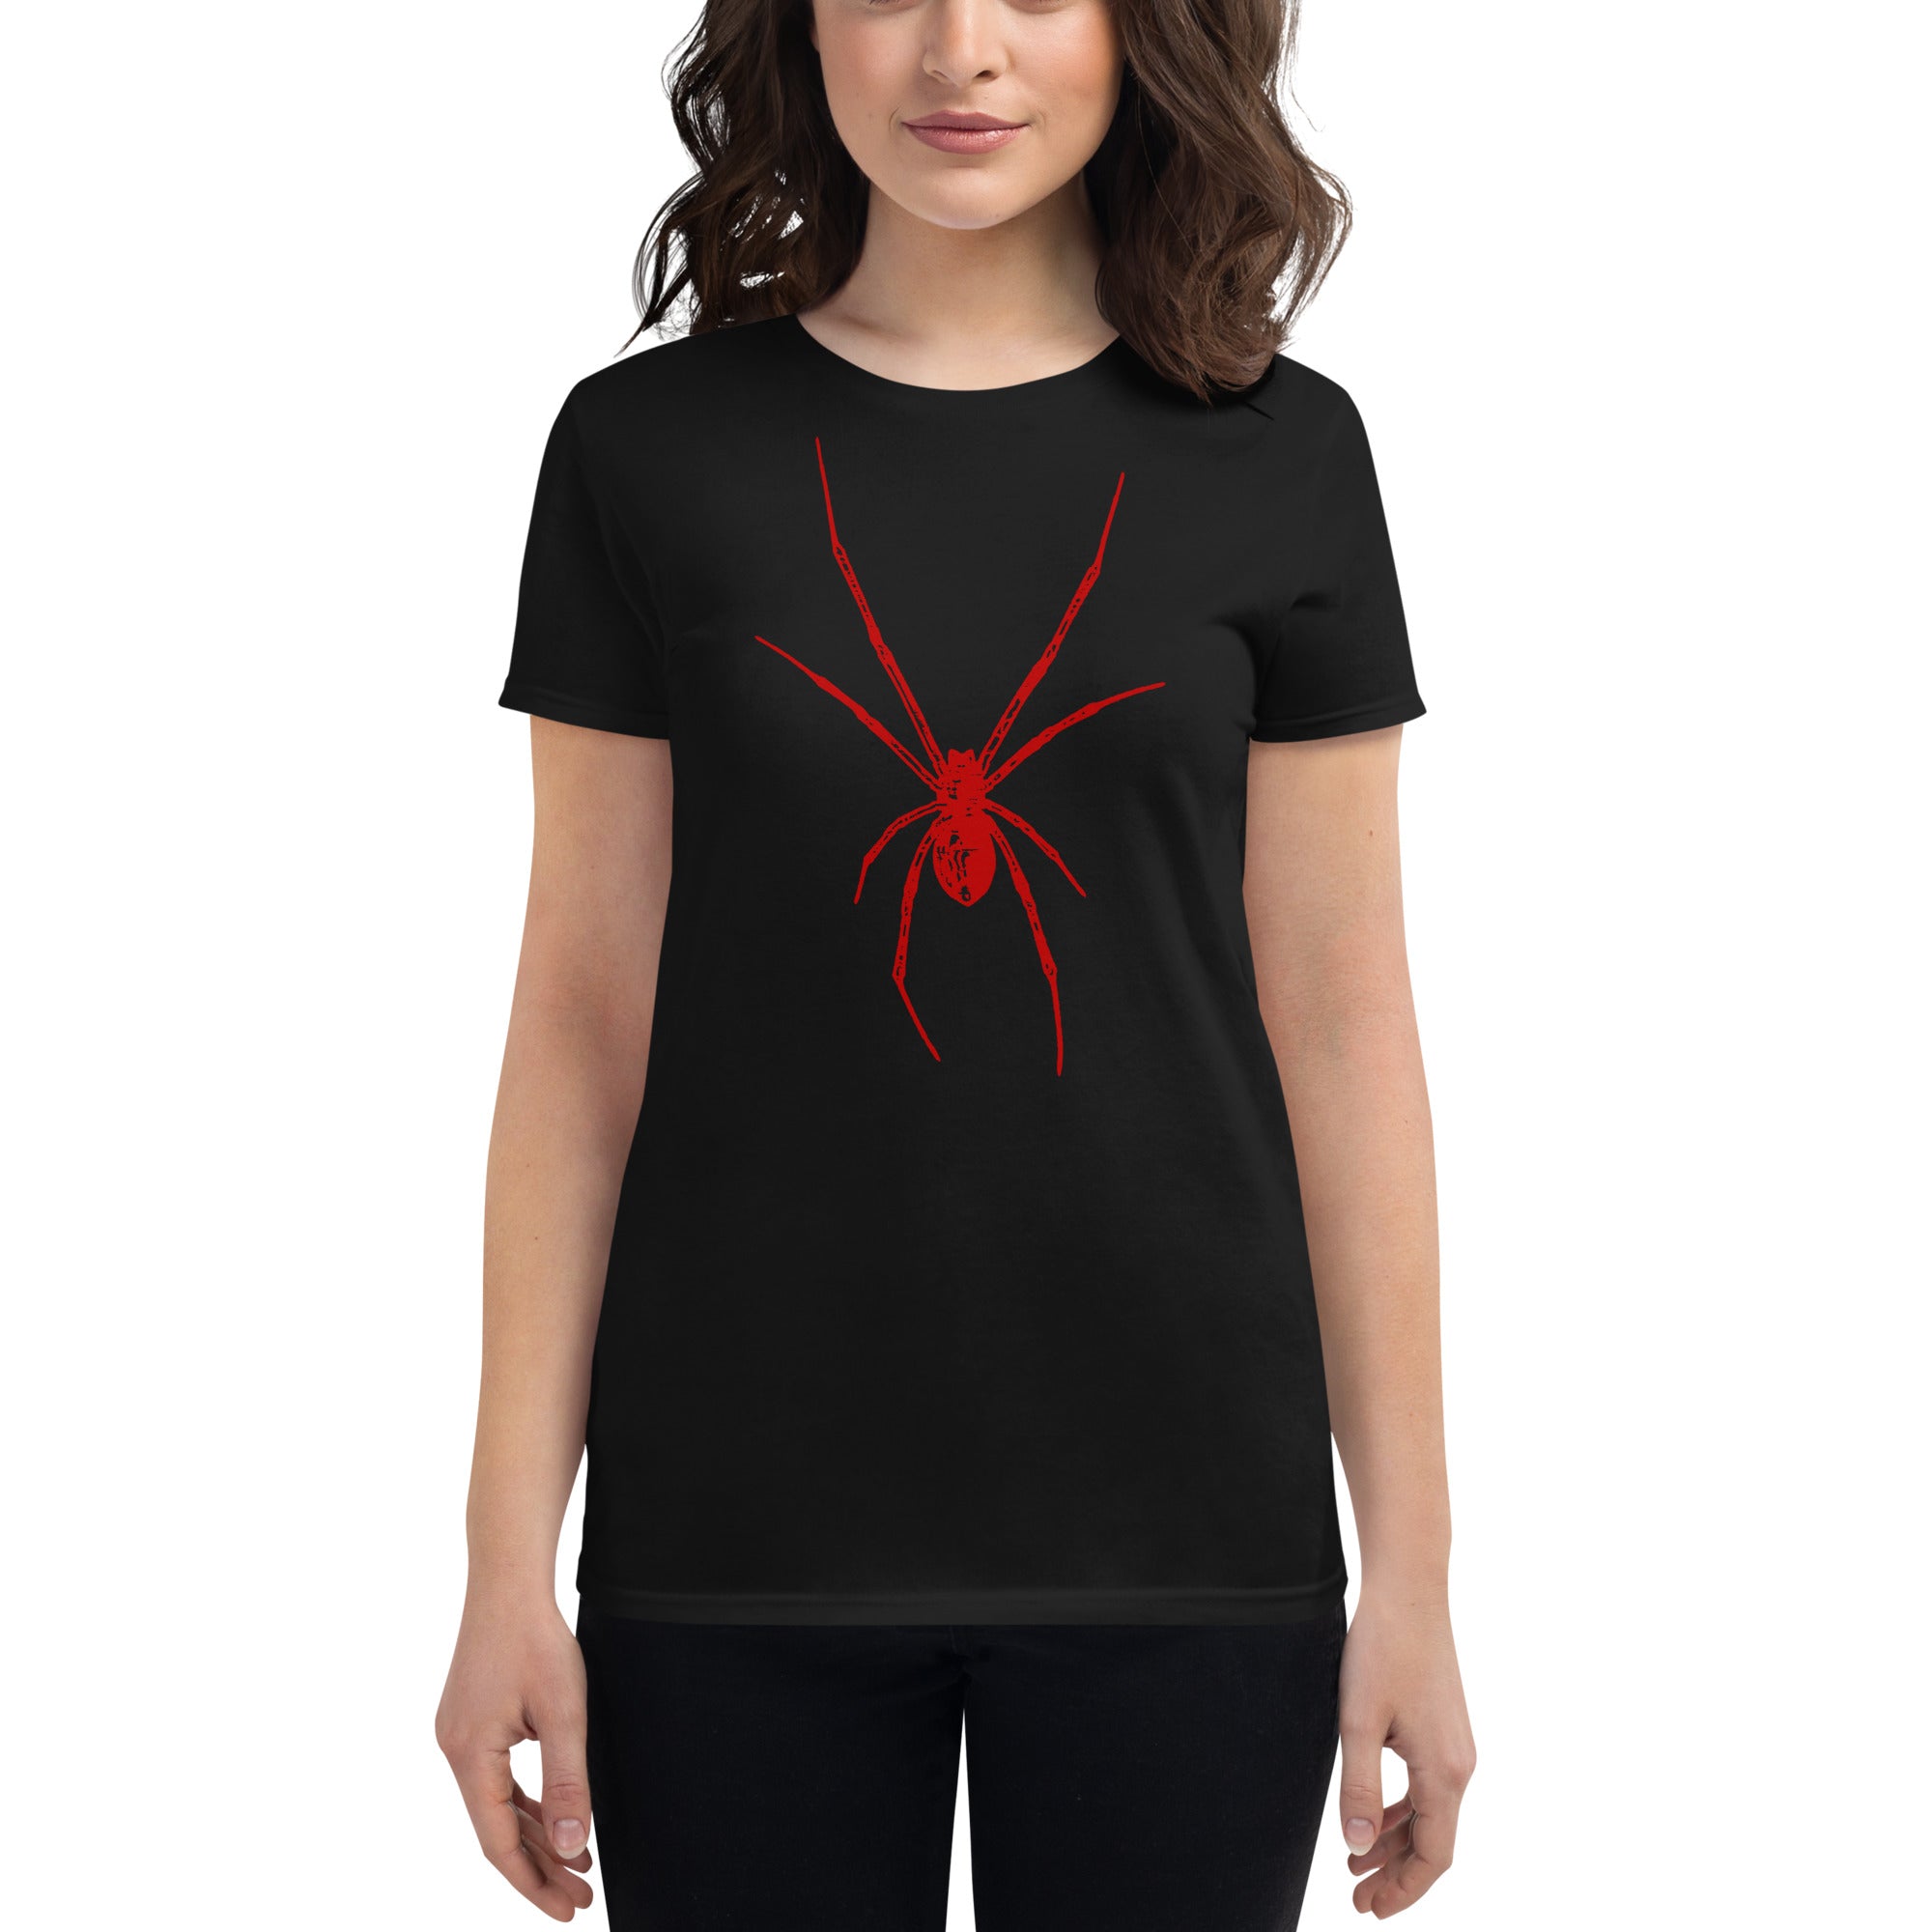 Red Creepy Spider Arachnid Black Widow Women's Short Sleeve Babydoll T-shirt